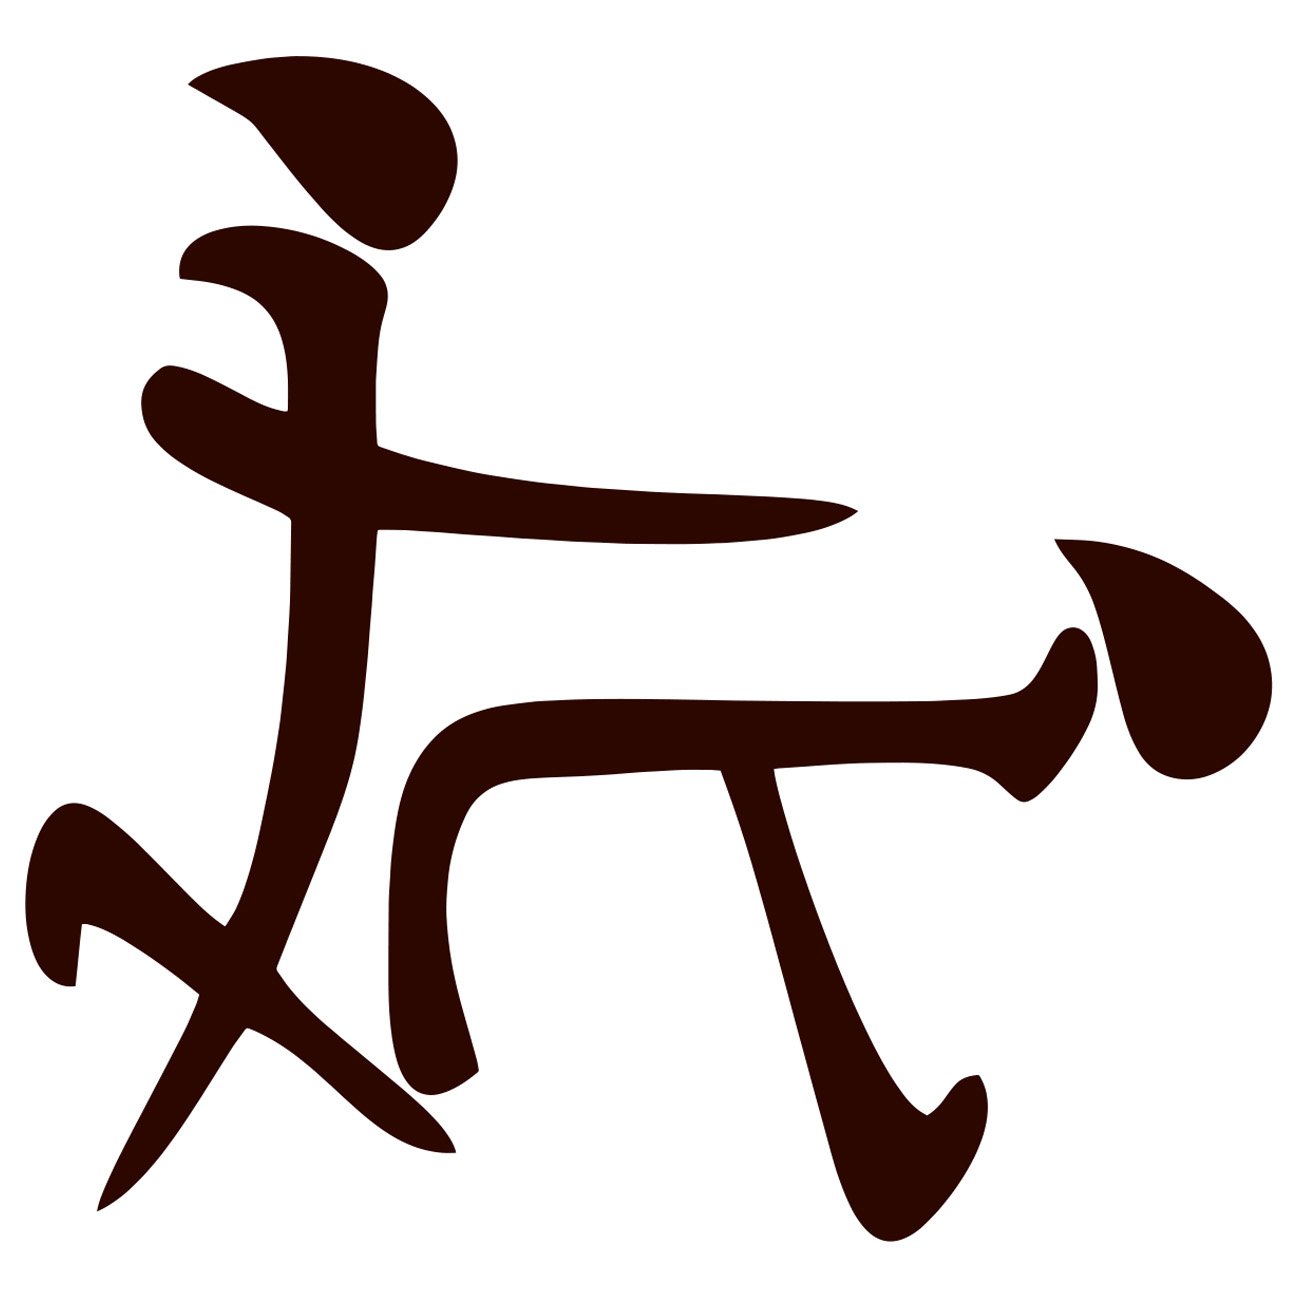 Chinese symbol fuck